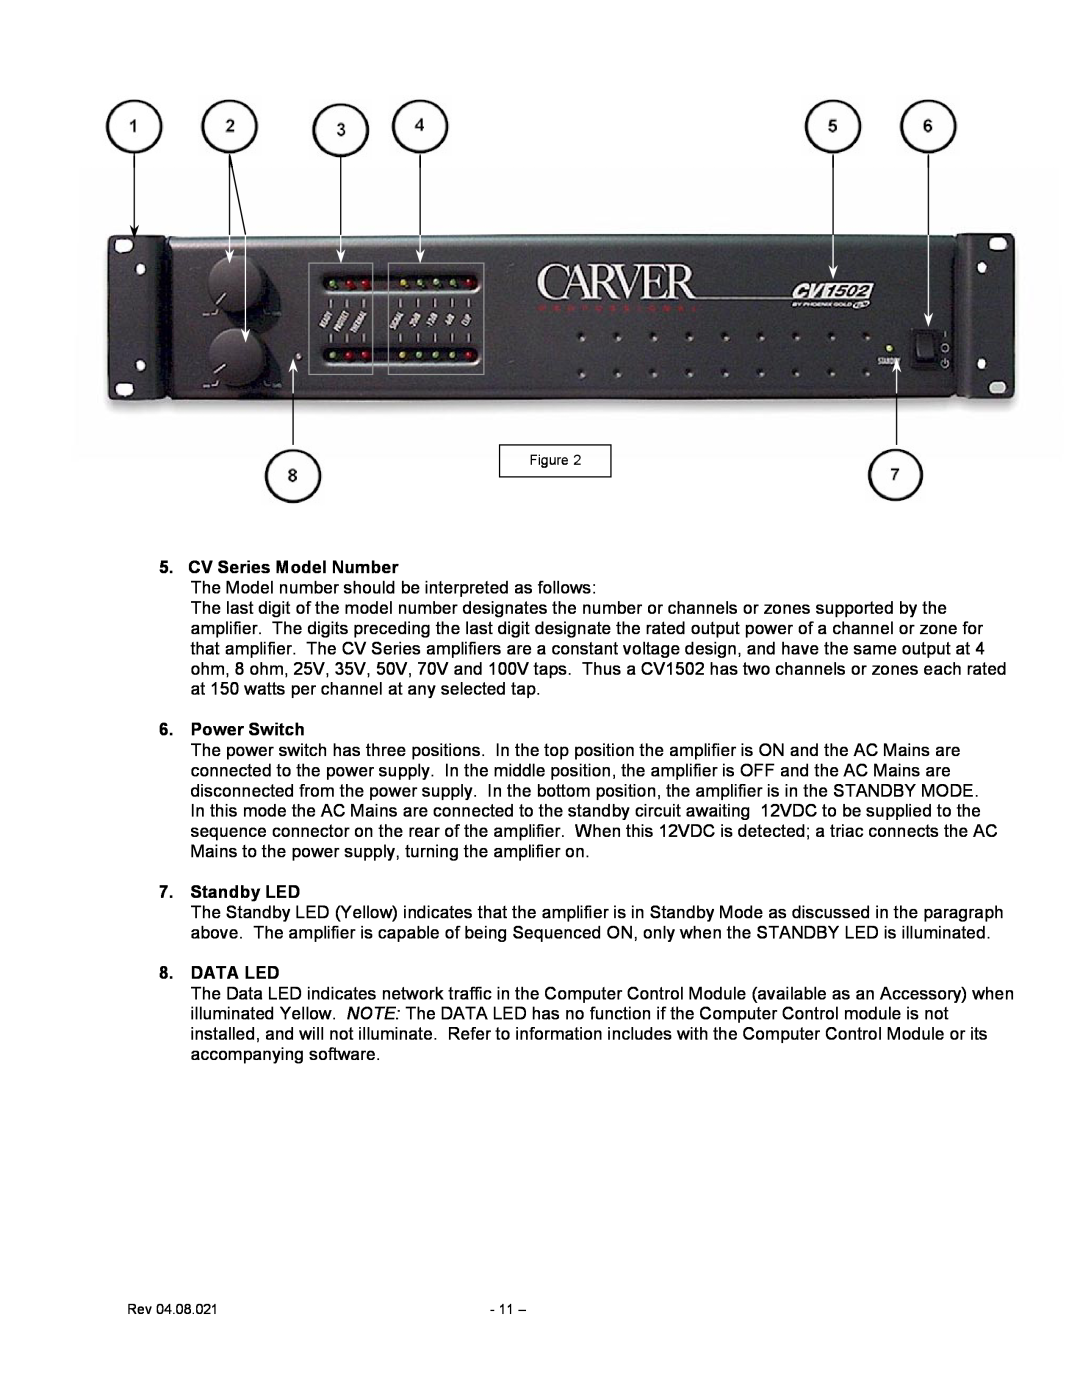 Carver user manual CV Series Model Number, Power Switch, Standby LED, Data Led 